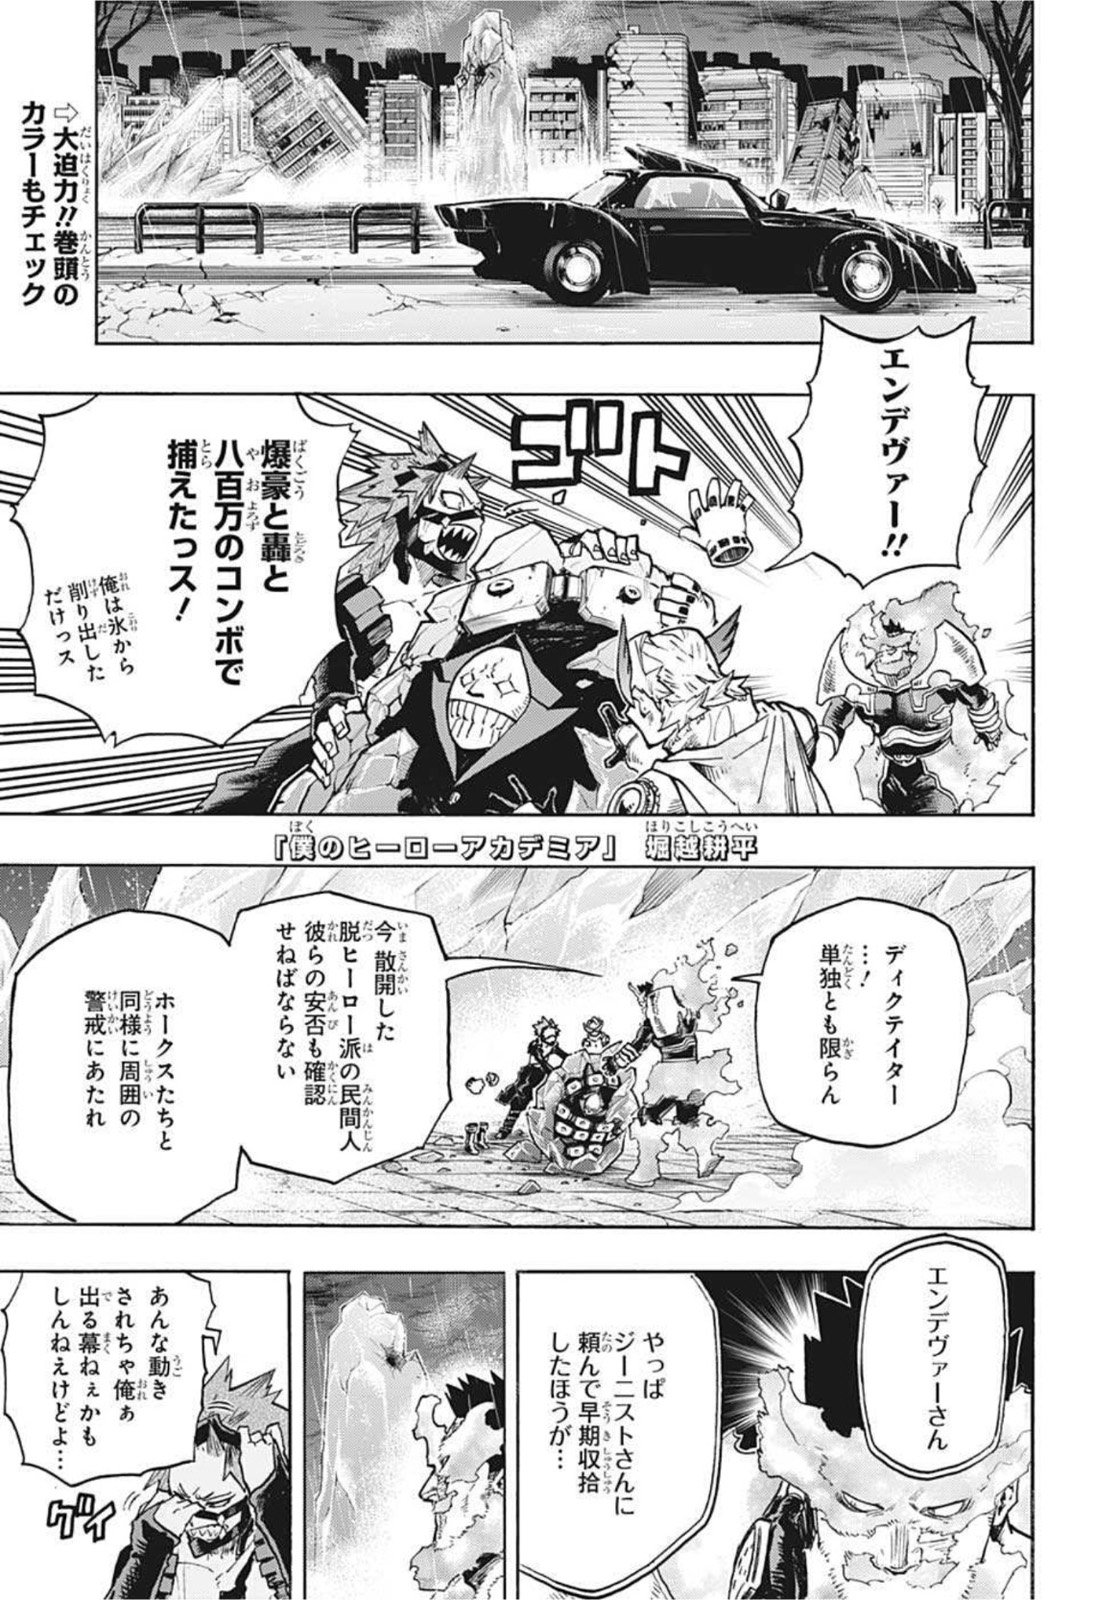 Boku no Hero Academia - Chapter 321 - Page 1